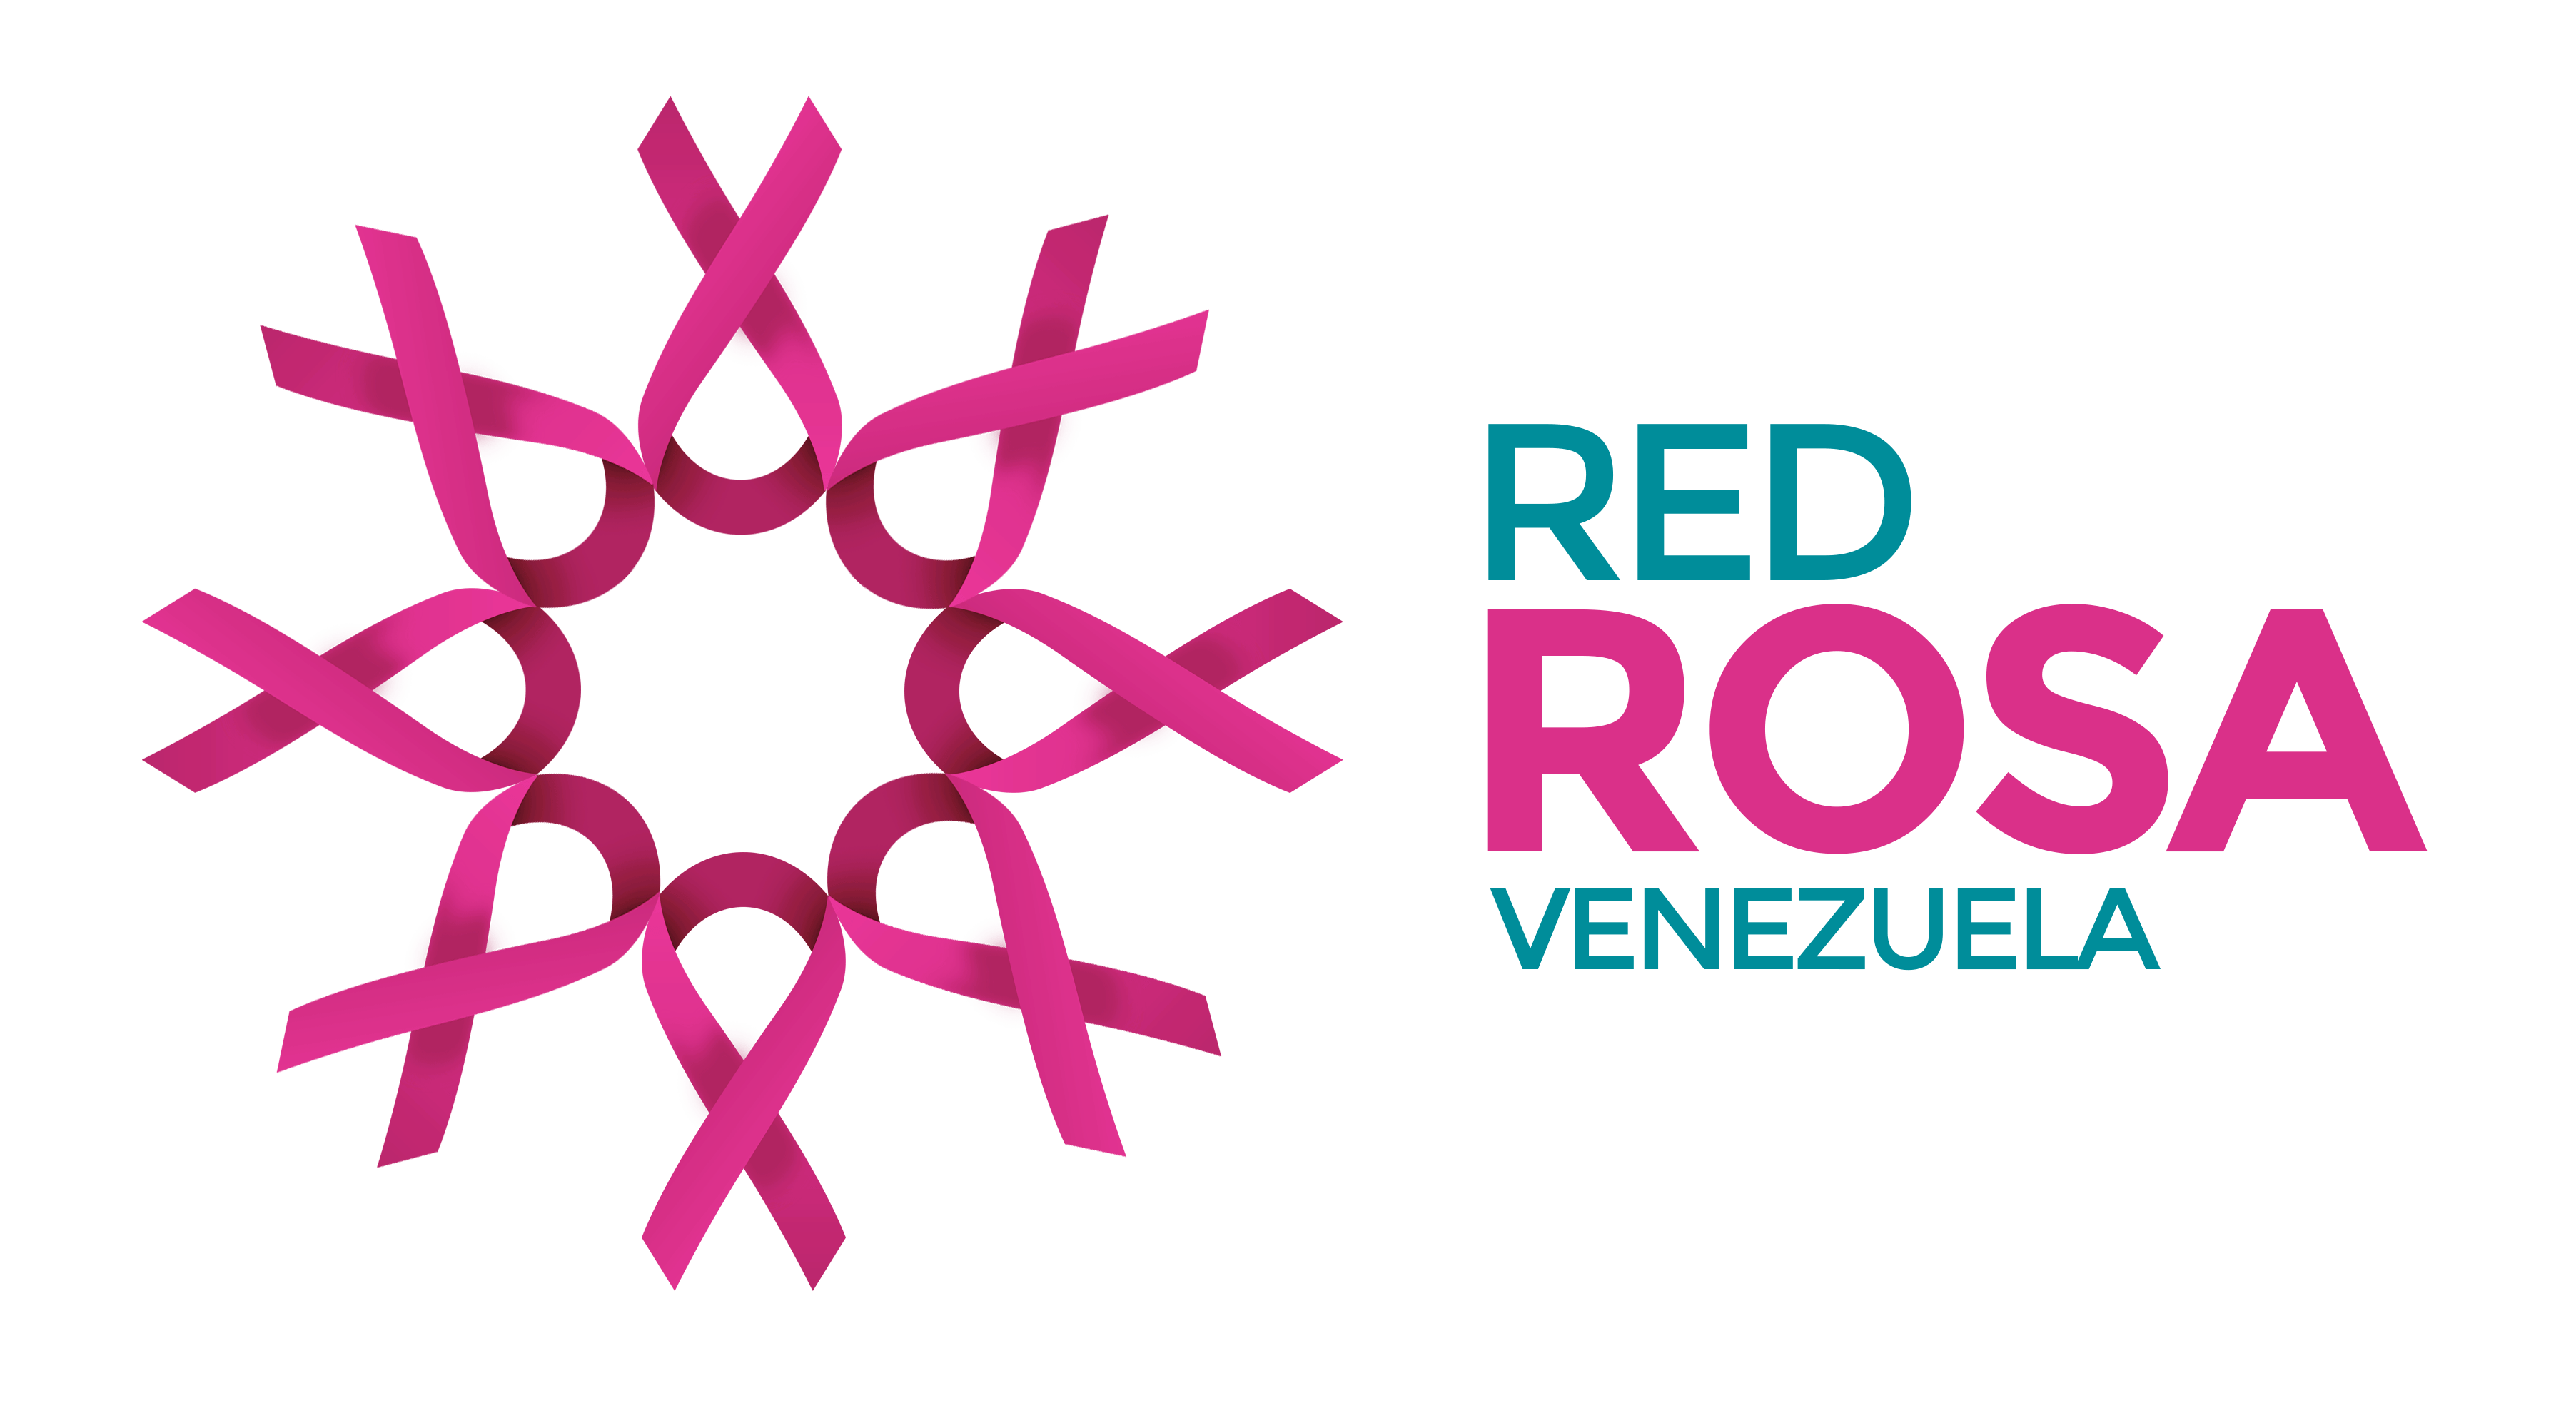 Red Rosa Venezuela